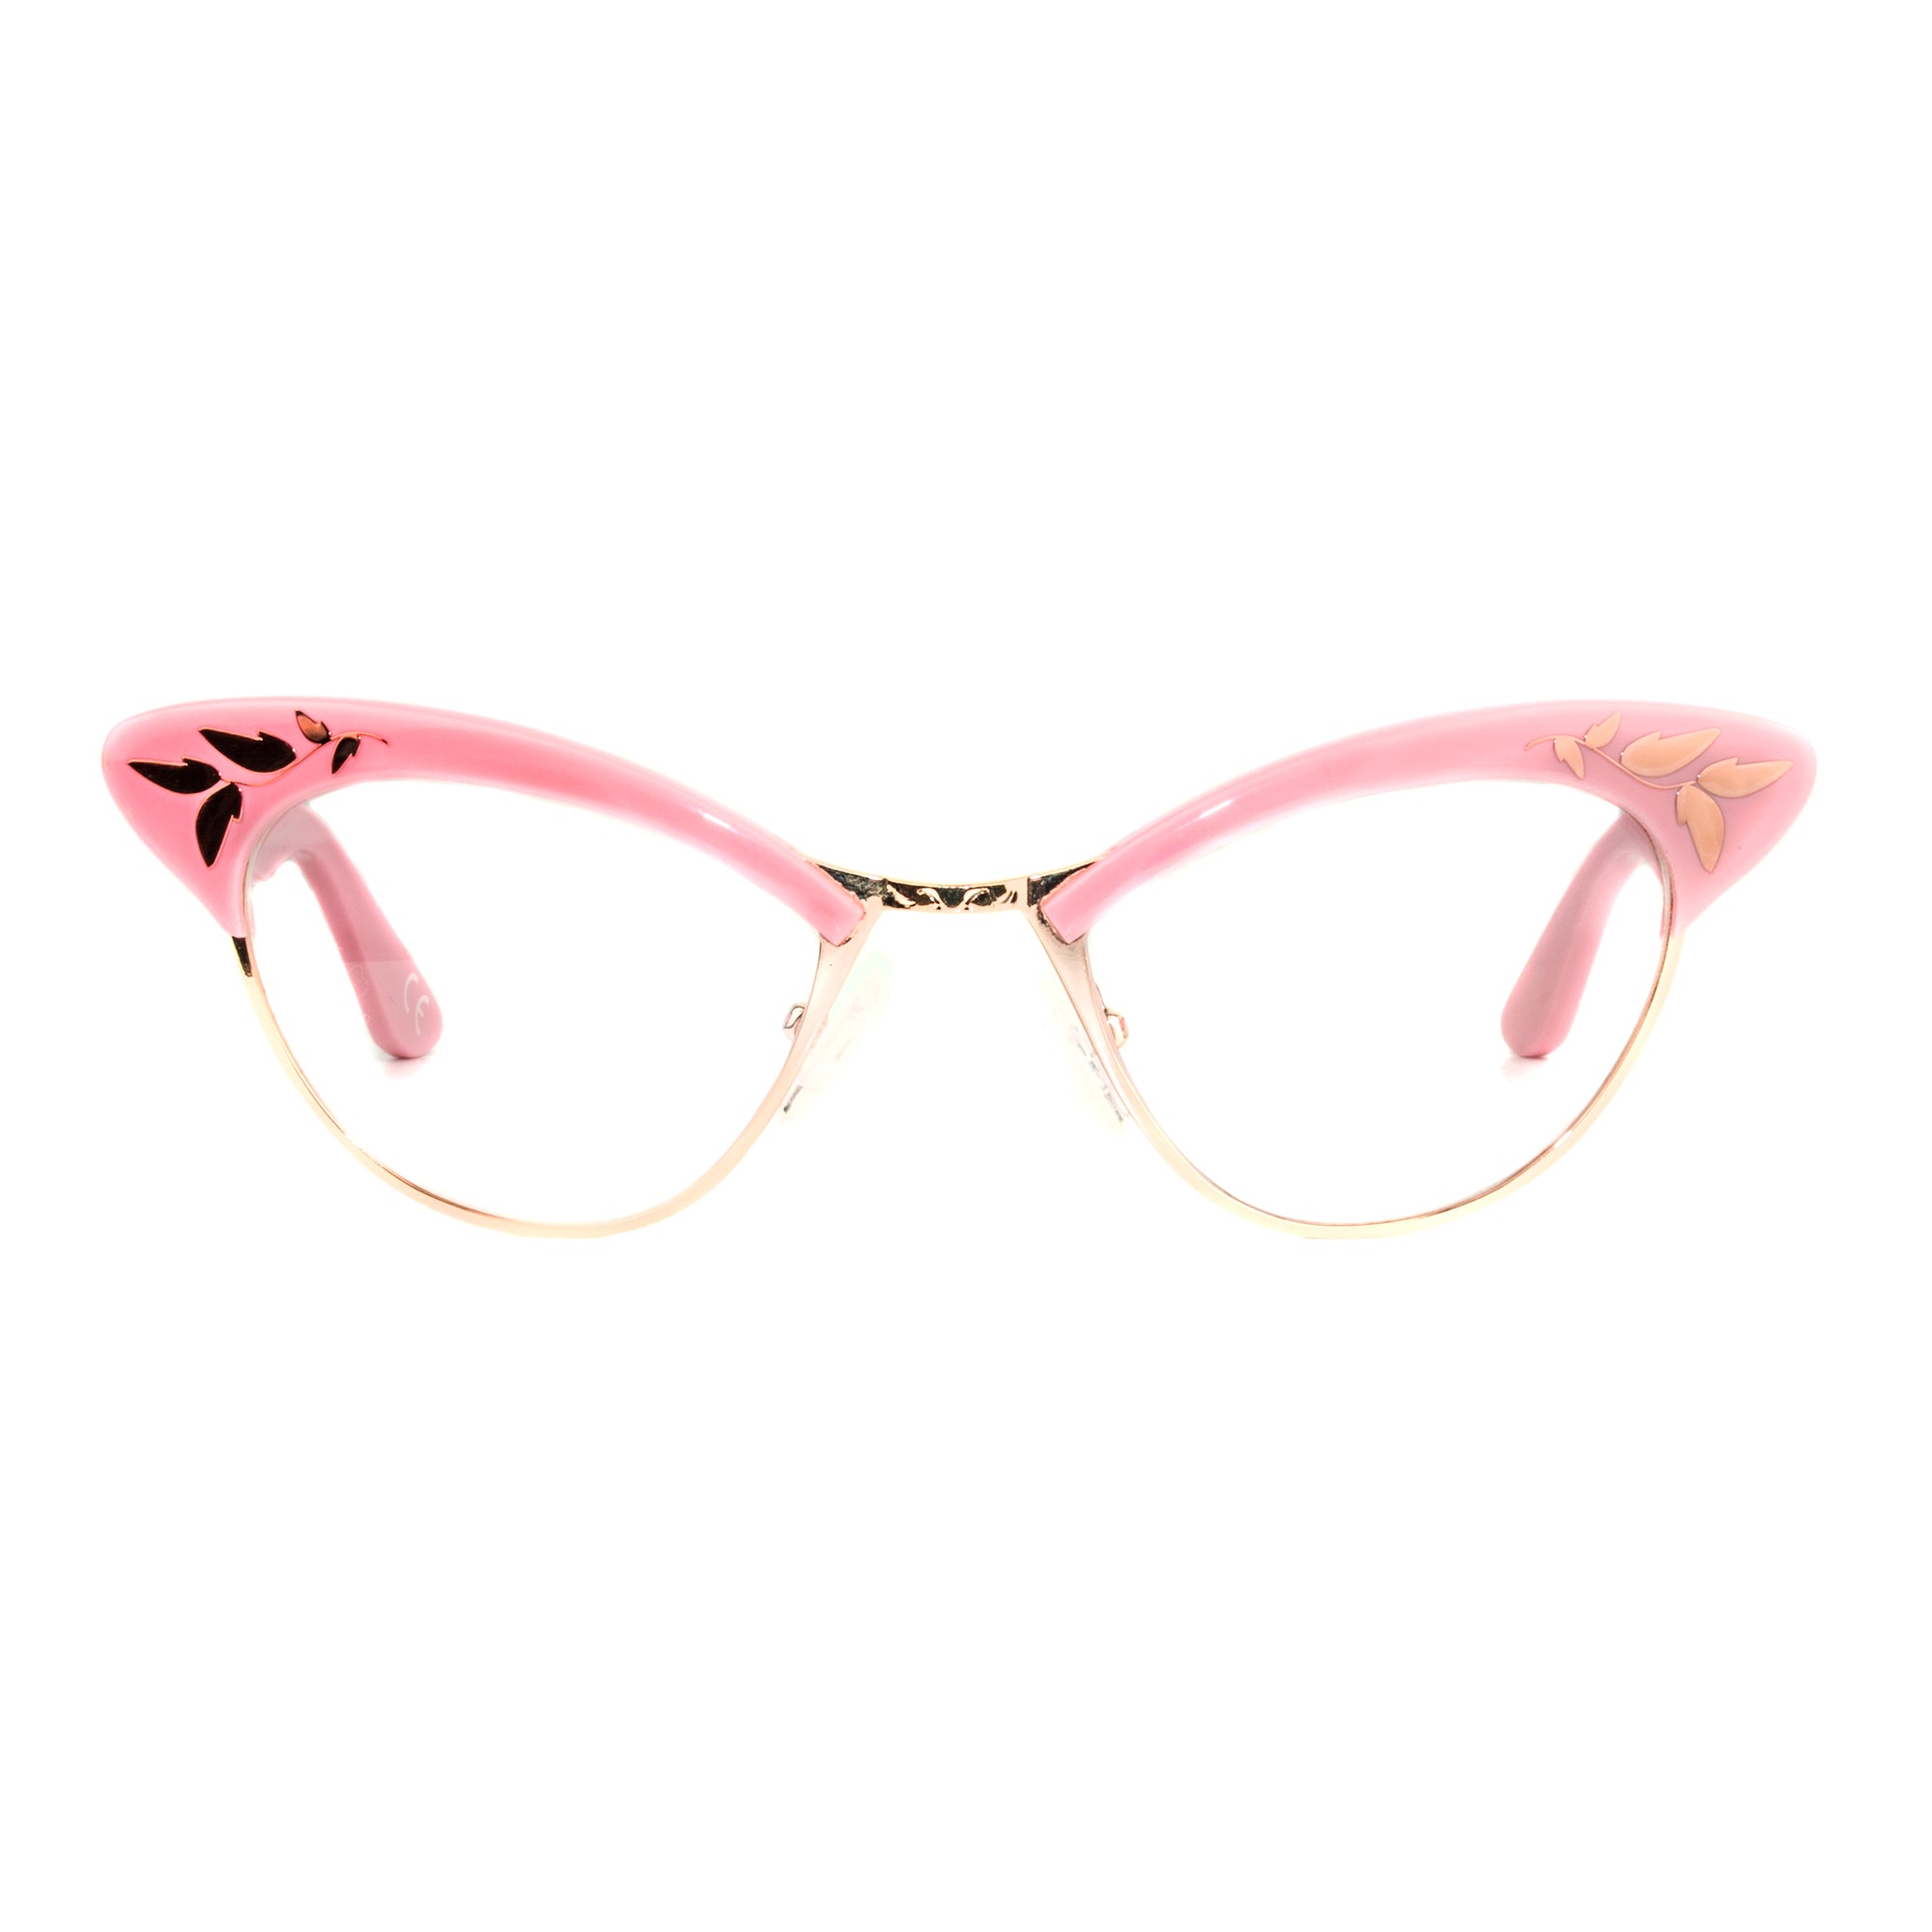 Cat Eye Glasses Frames - Pink & Rose Gold - Rita